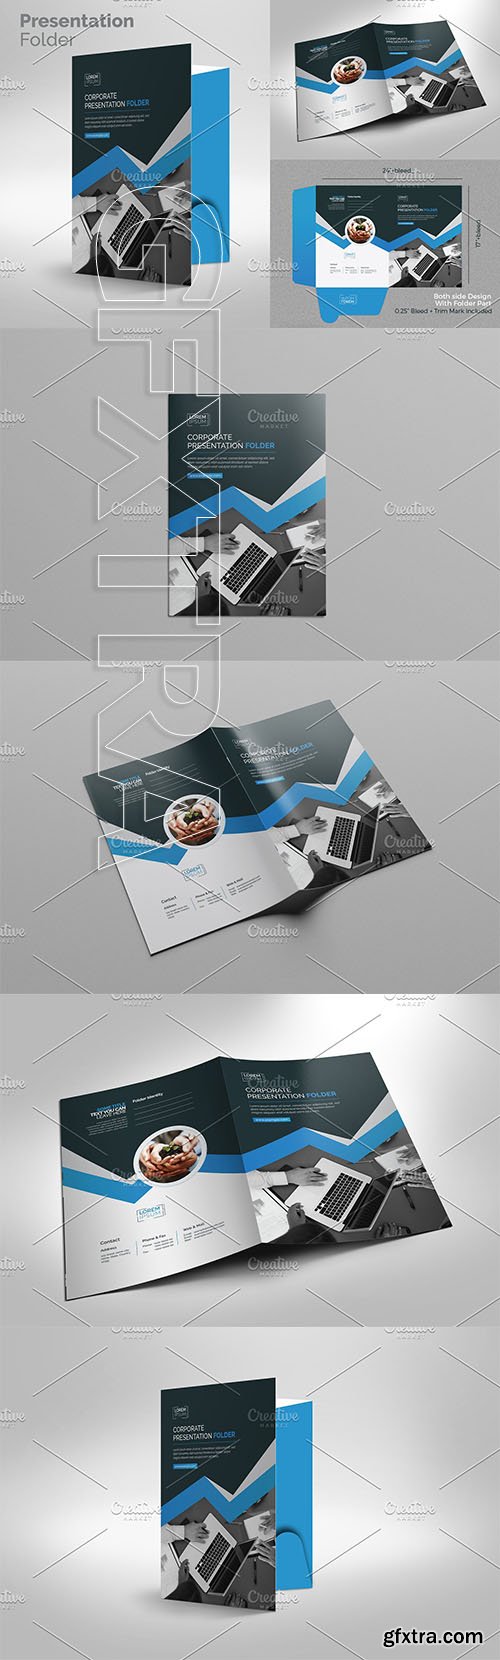 CreativeMarket - Dark and Blue Presentation Folder 3084668